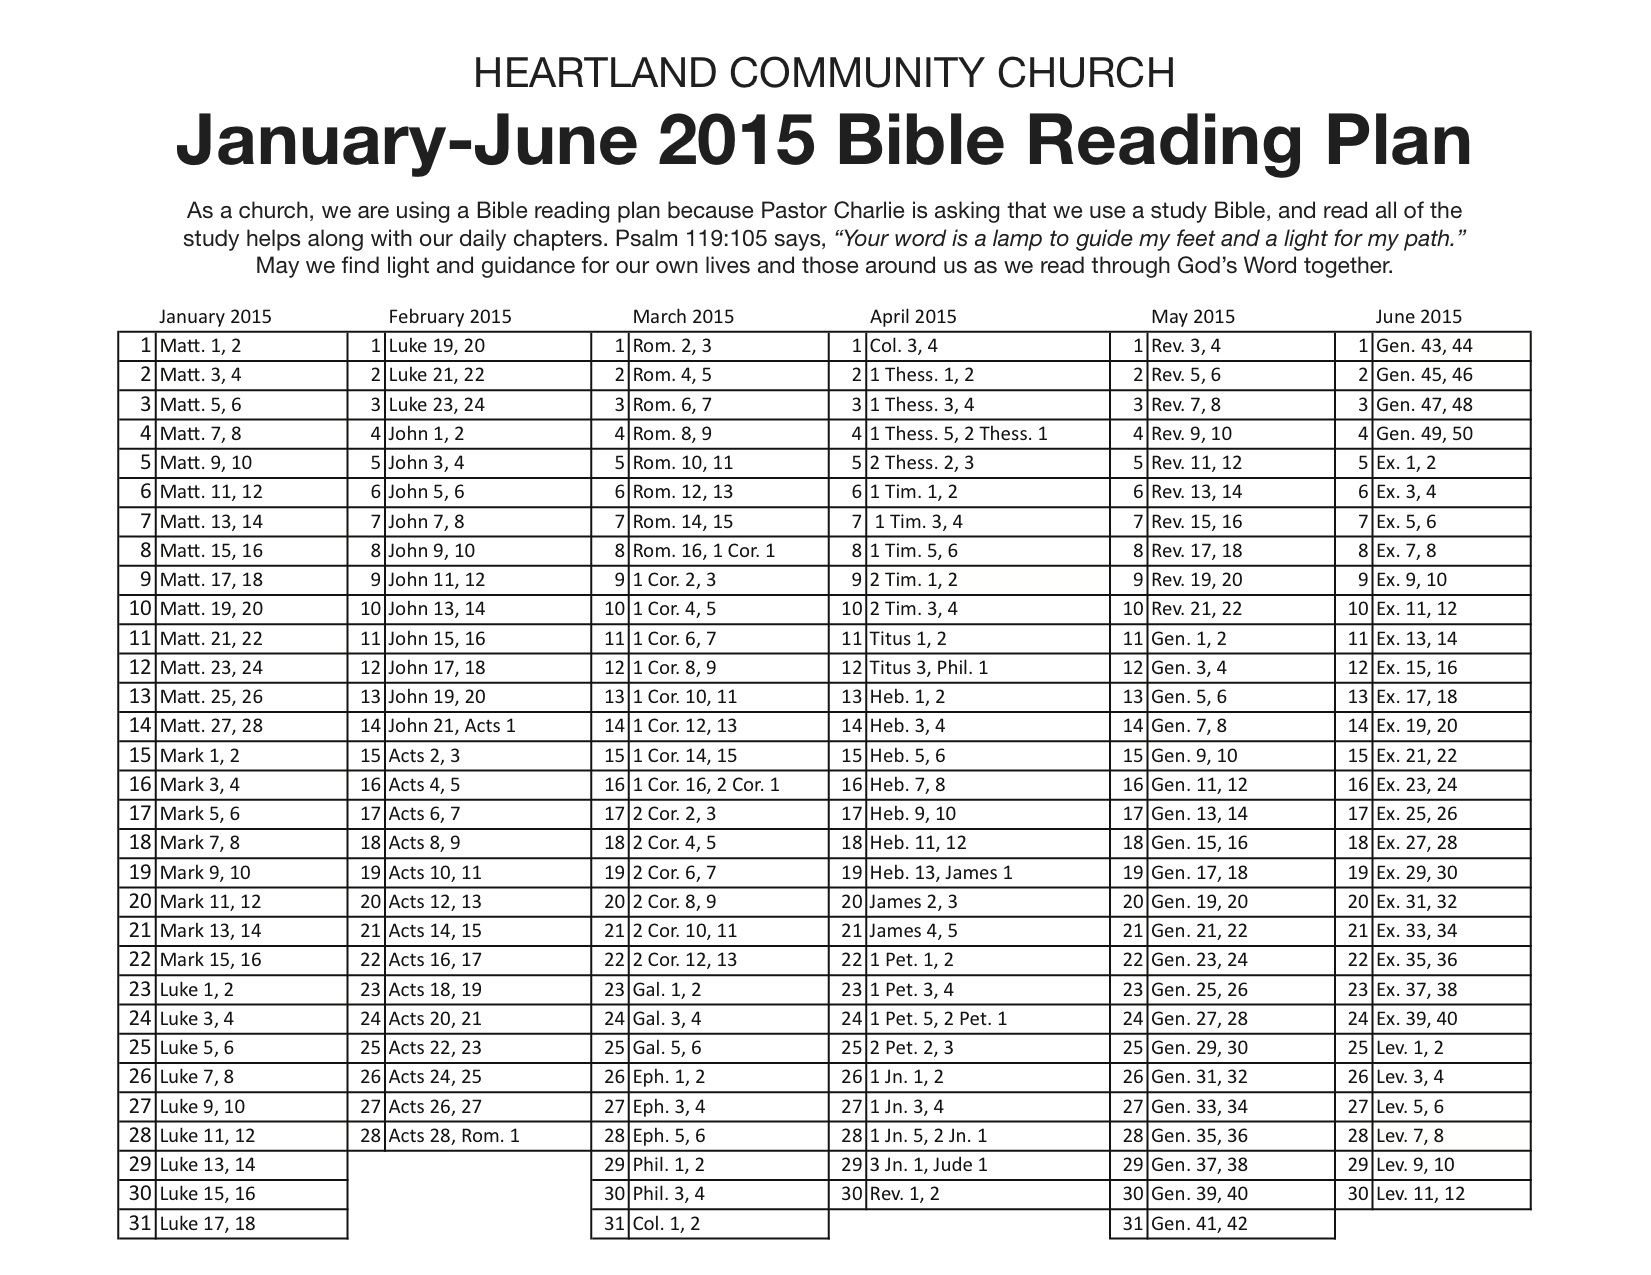 biblereadingplan-jan-jun2015-heartland-ministries